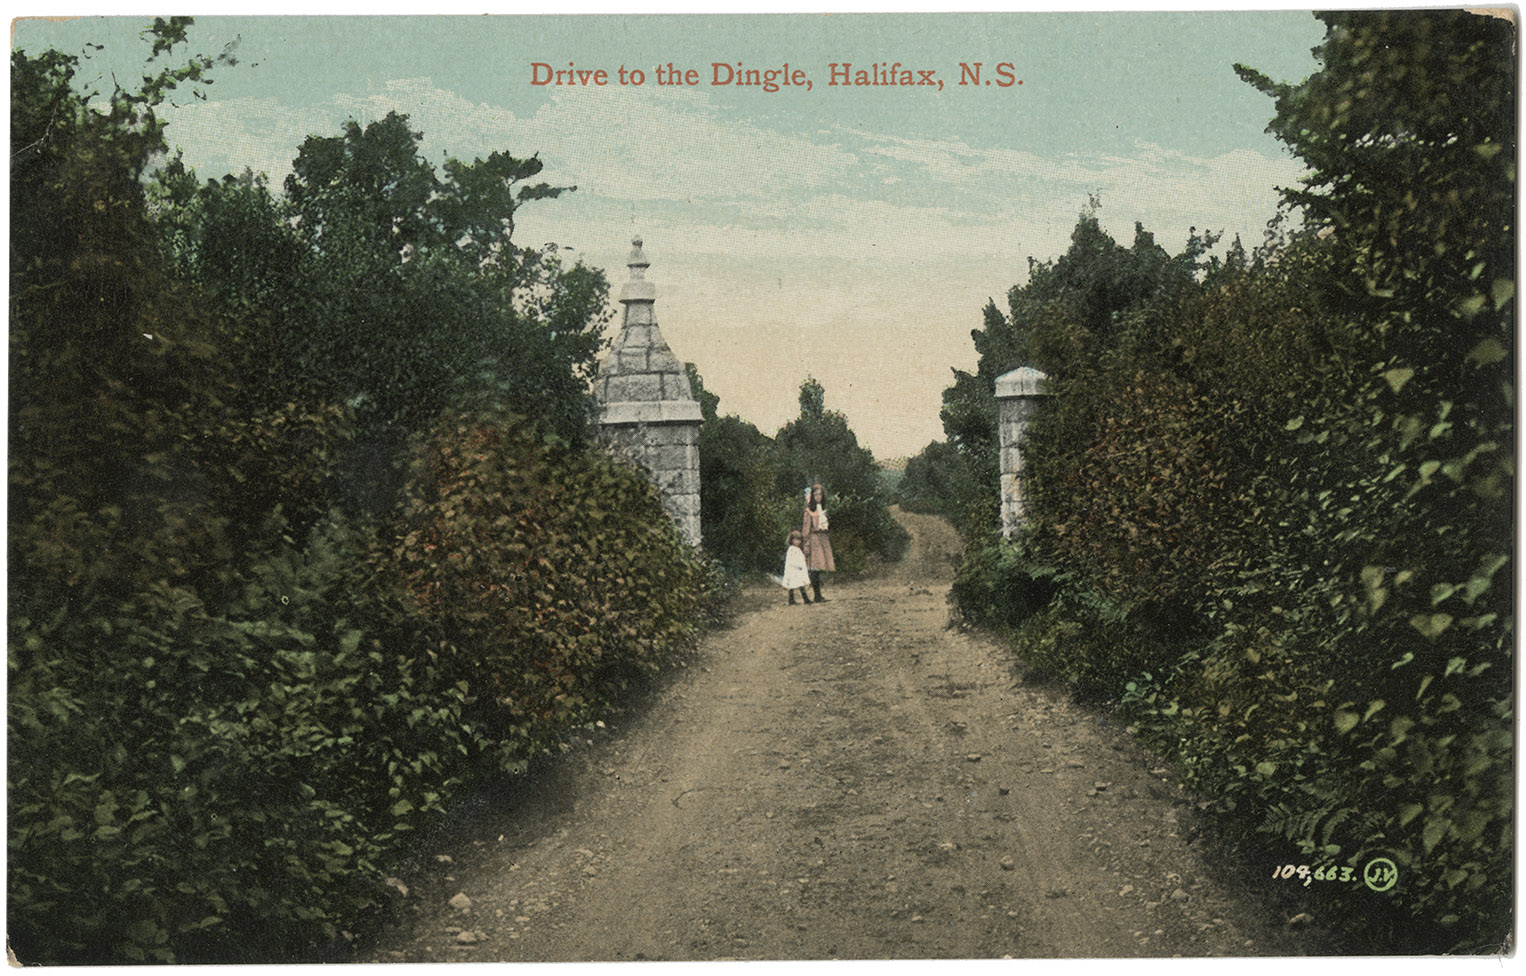 communityalbums - Drive to the Dingle, Halifax, N.S.